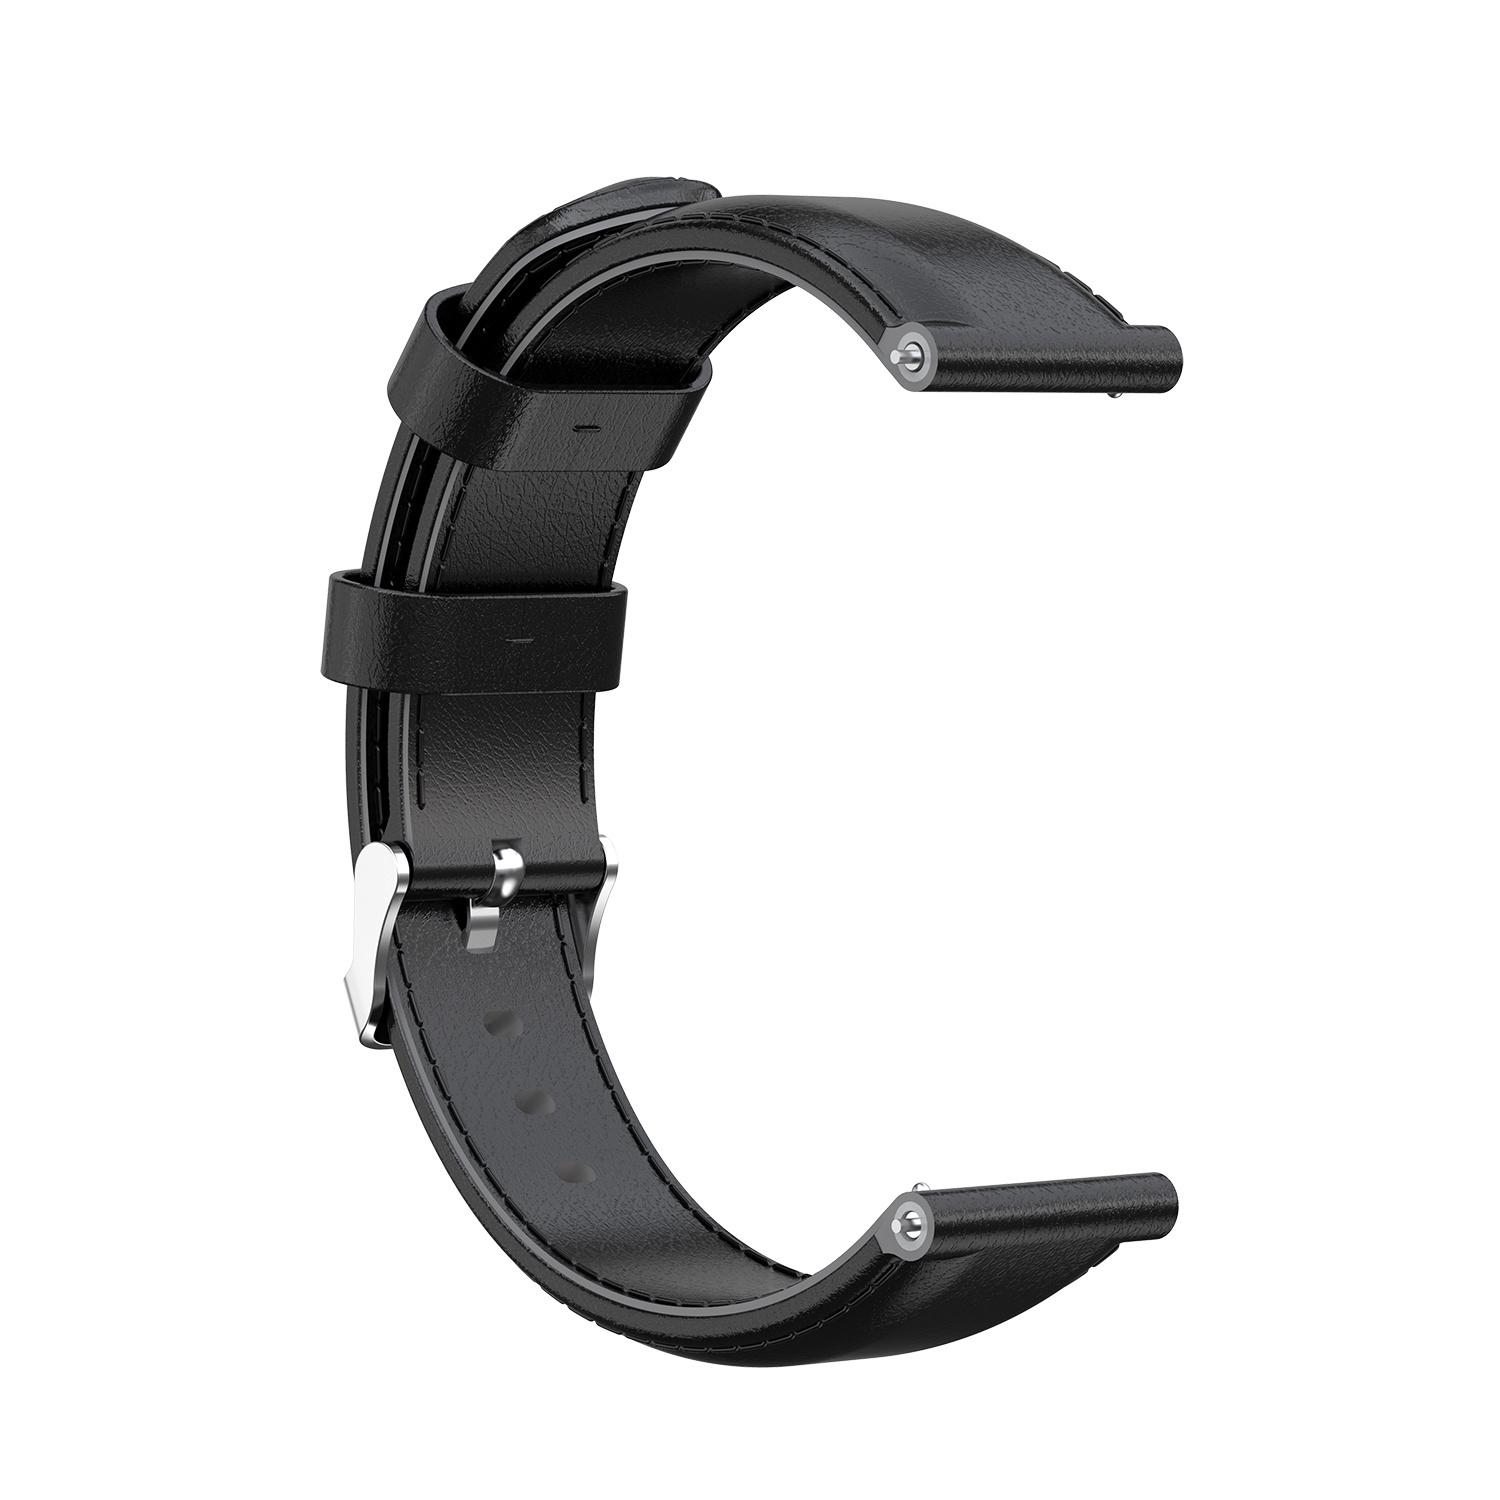 Cinturino in pelle per Samsung Galaxy Watch - nero